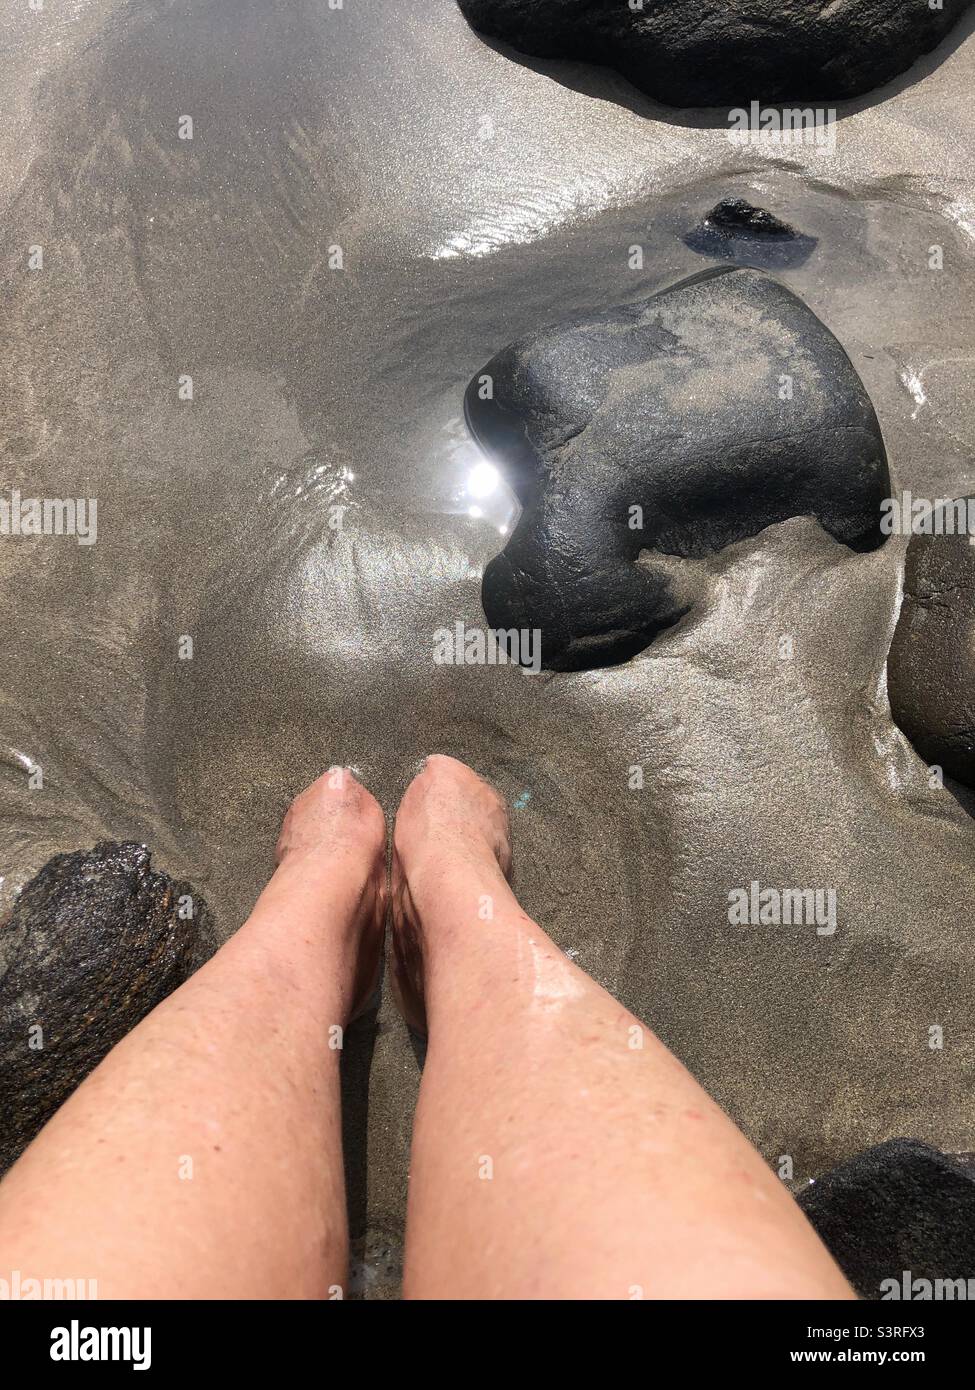 A woman’s feet buried in sea mud. Stock Photo